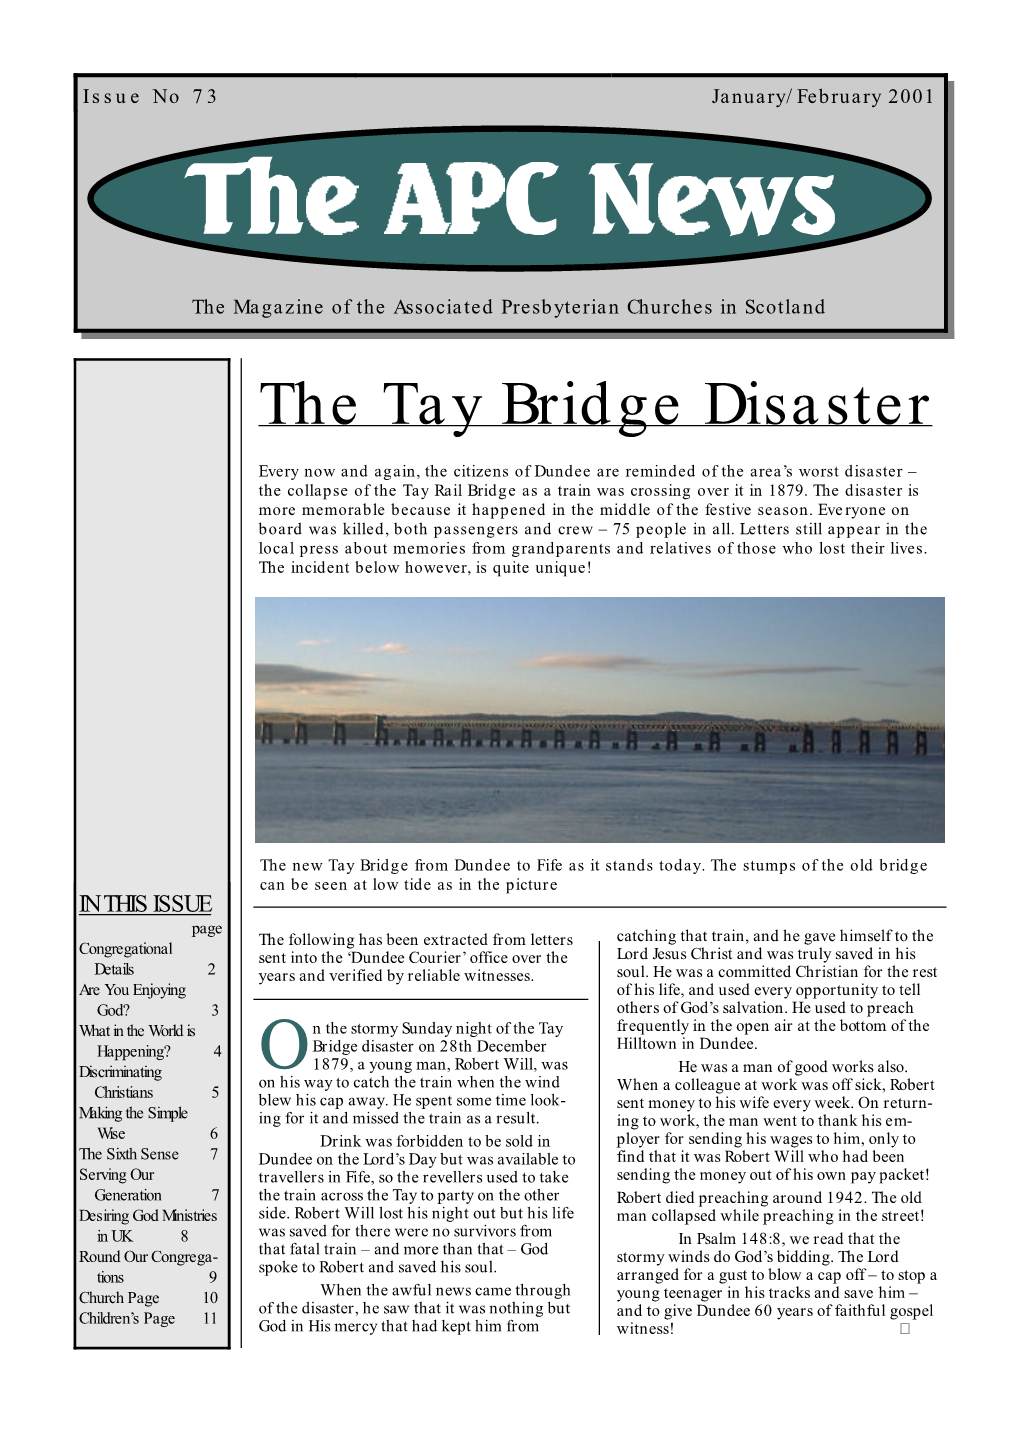 The Tay Bridge Disaster